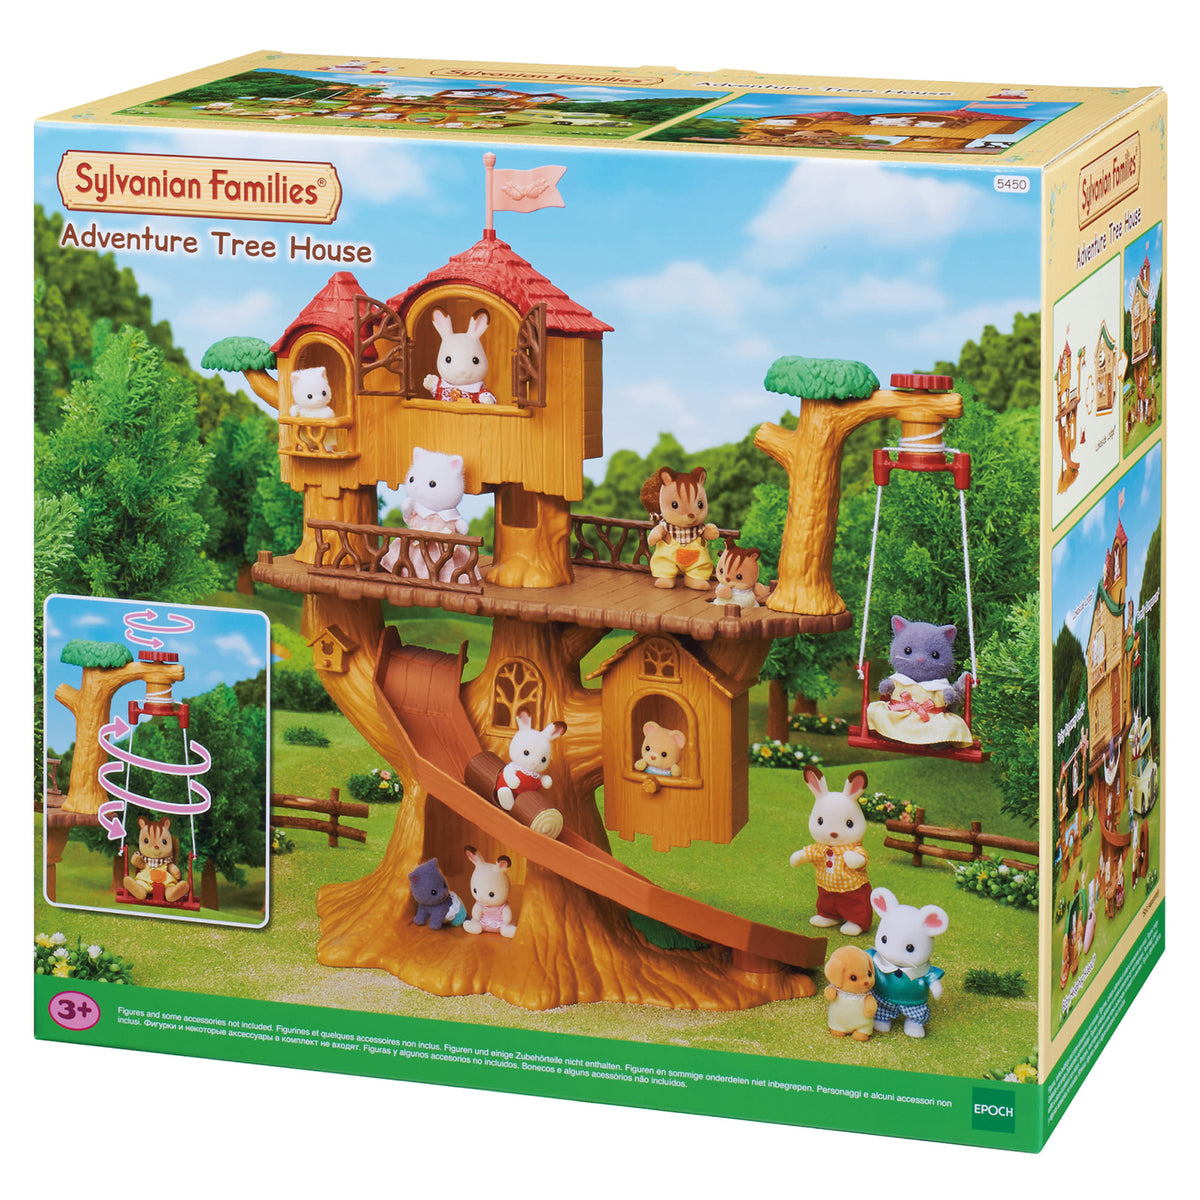 Sylvanian Families Adventure Tree House Toys R Us Australia